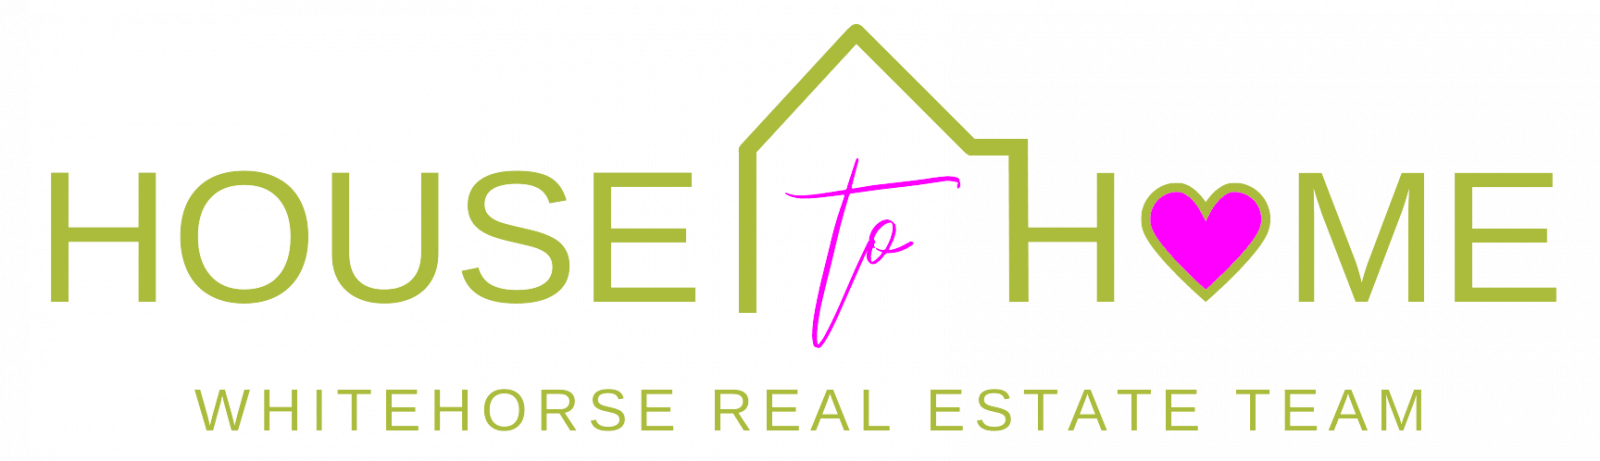 house to home whitehorse real estate team logo